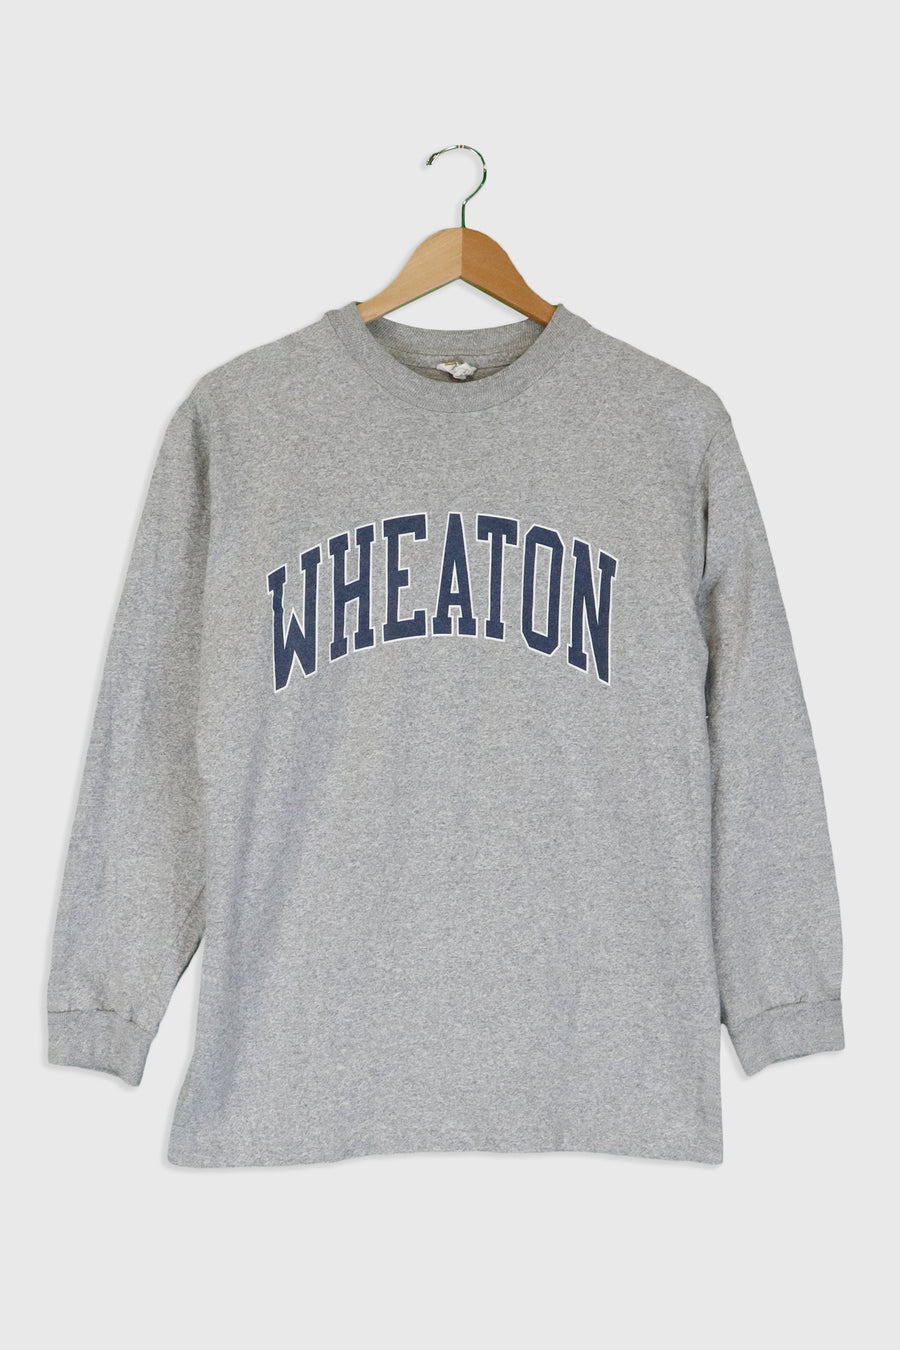 Vintage Wheaton College Long Sleeve T Shirt Sz M